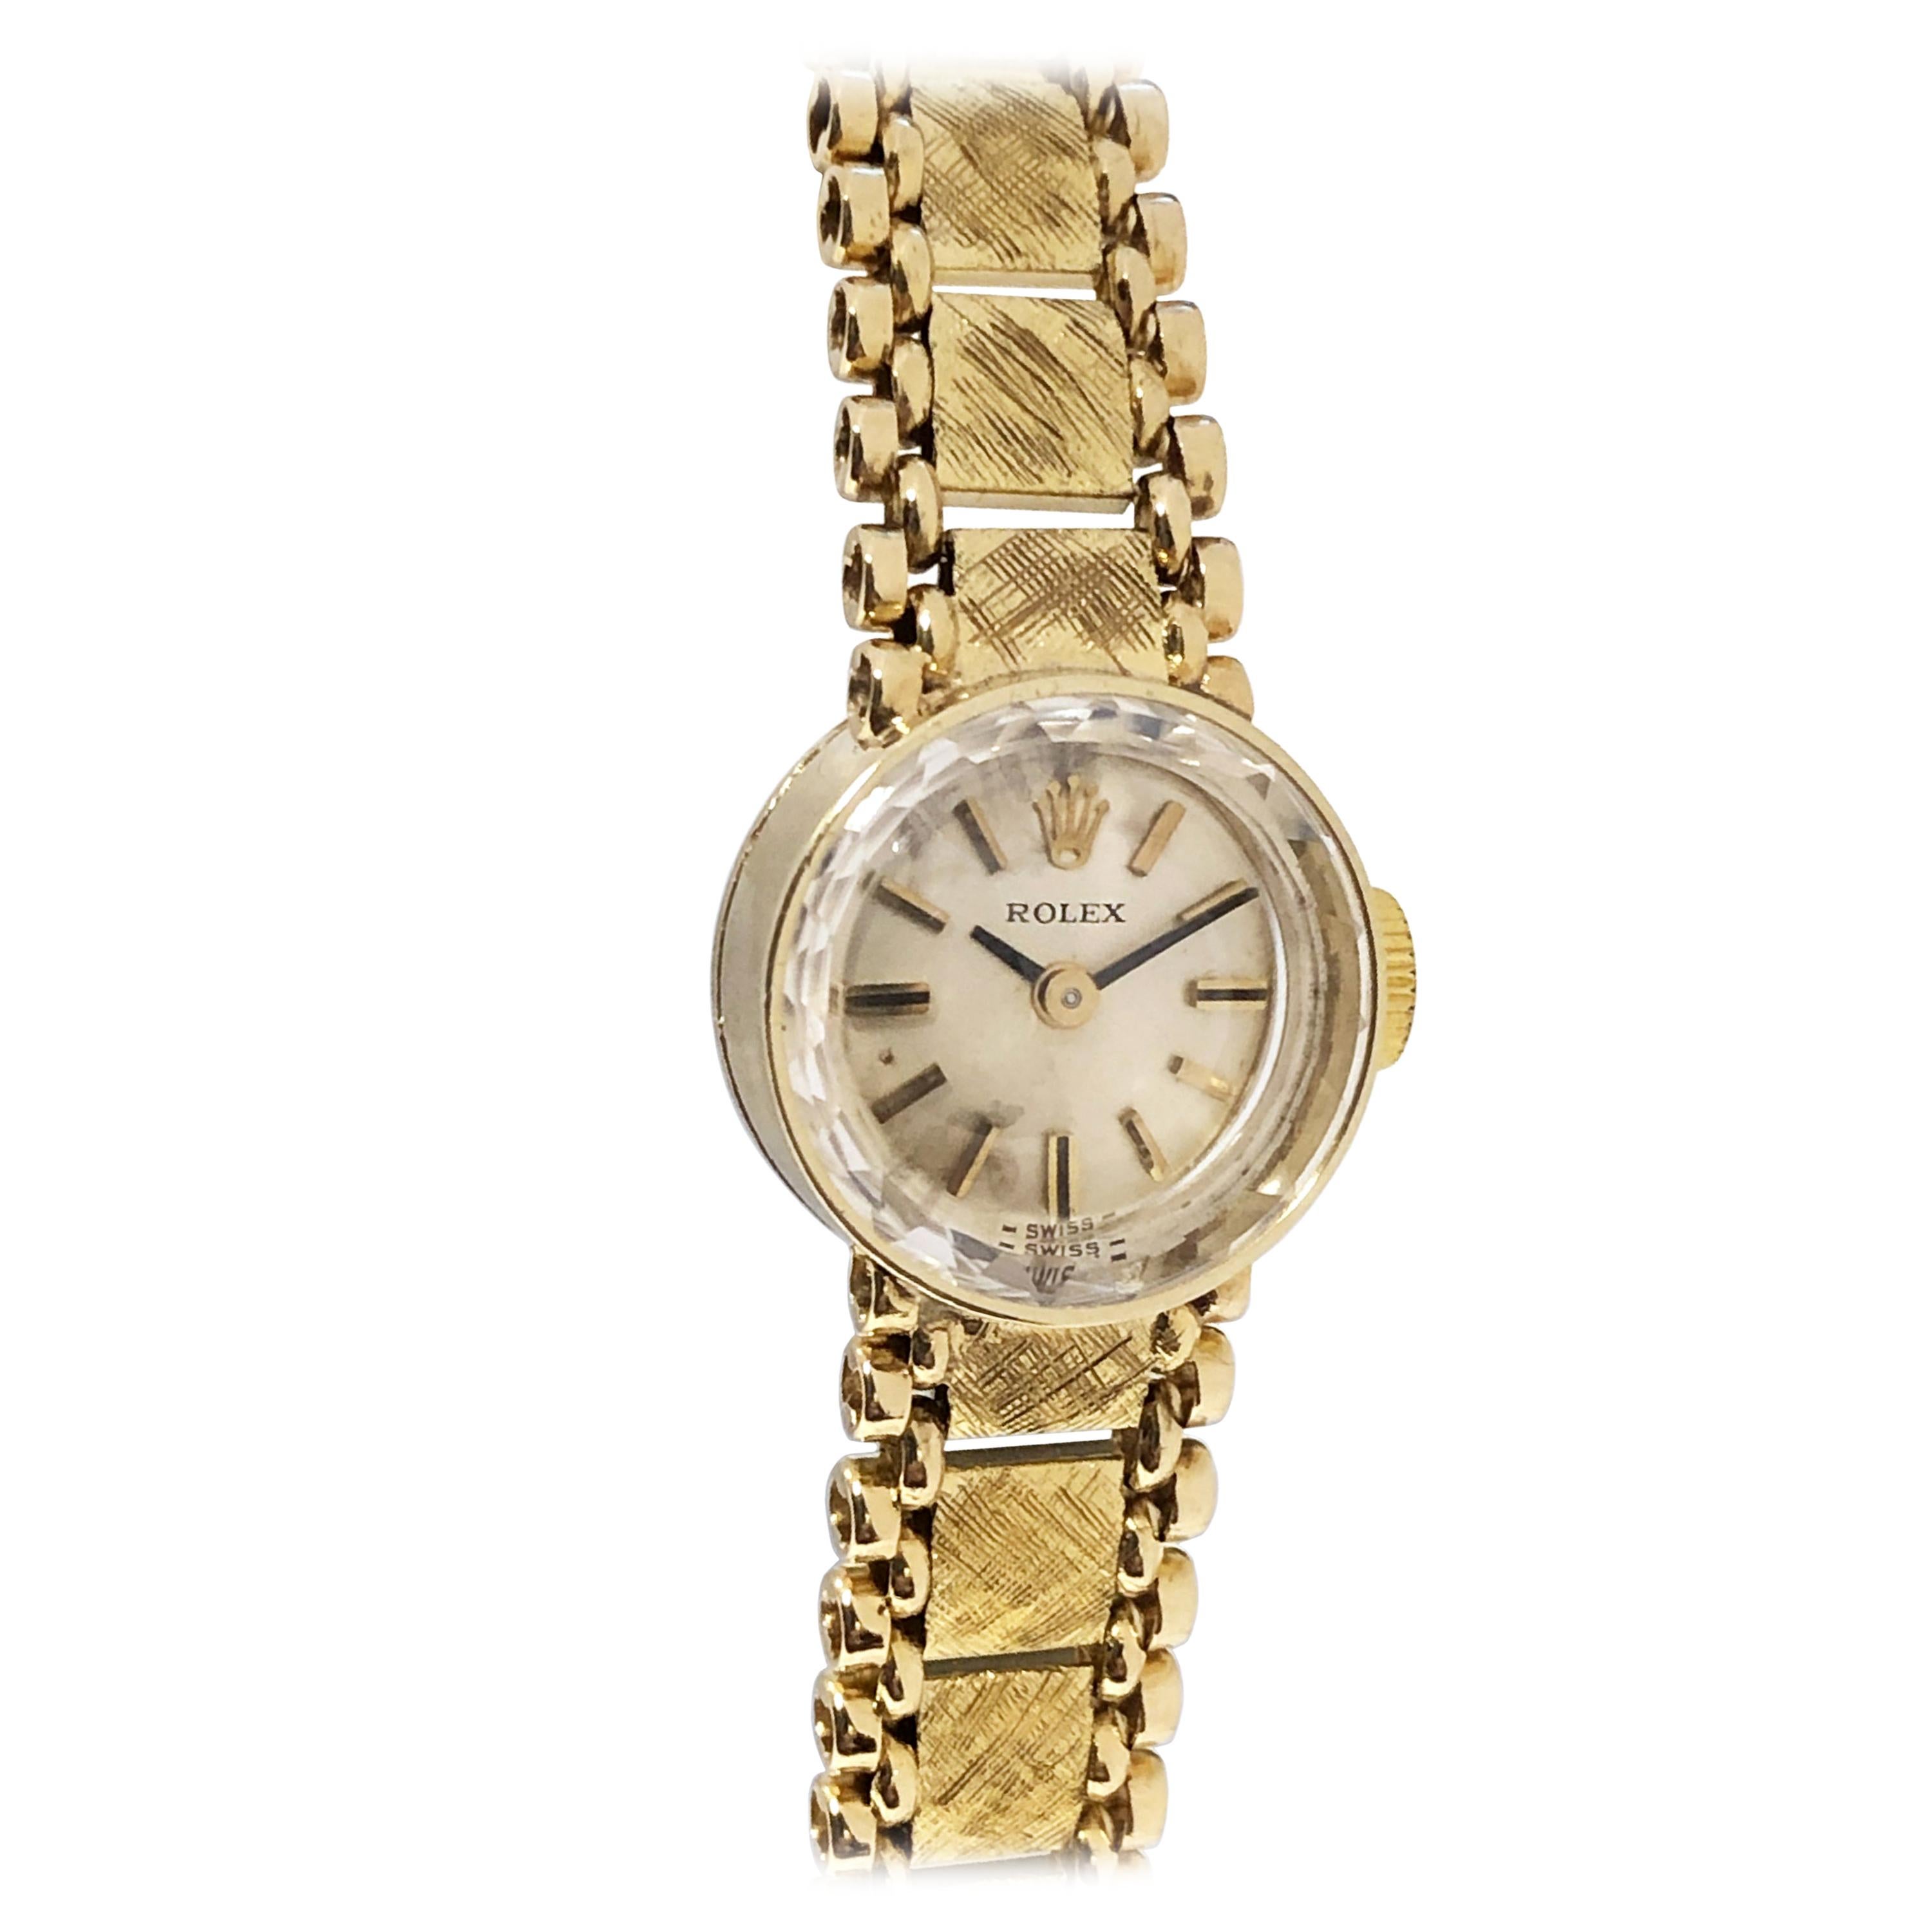 Rolex Vintage Ladies Mechanical Bracelet Watch with Original Certificate